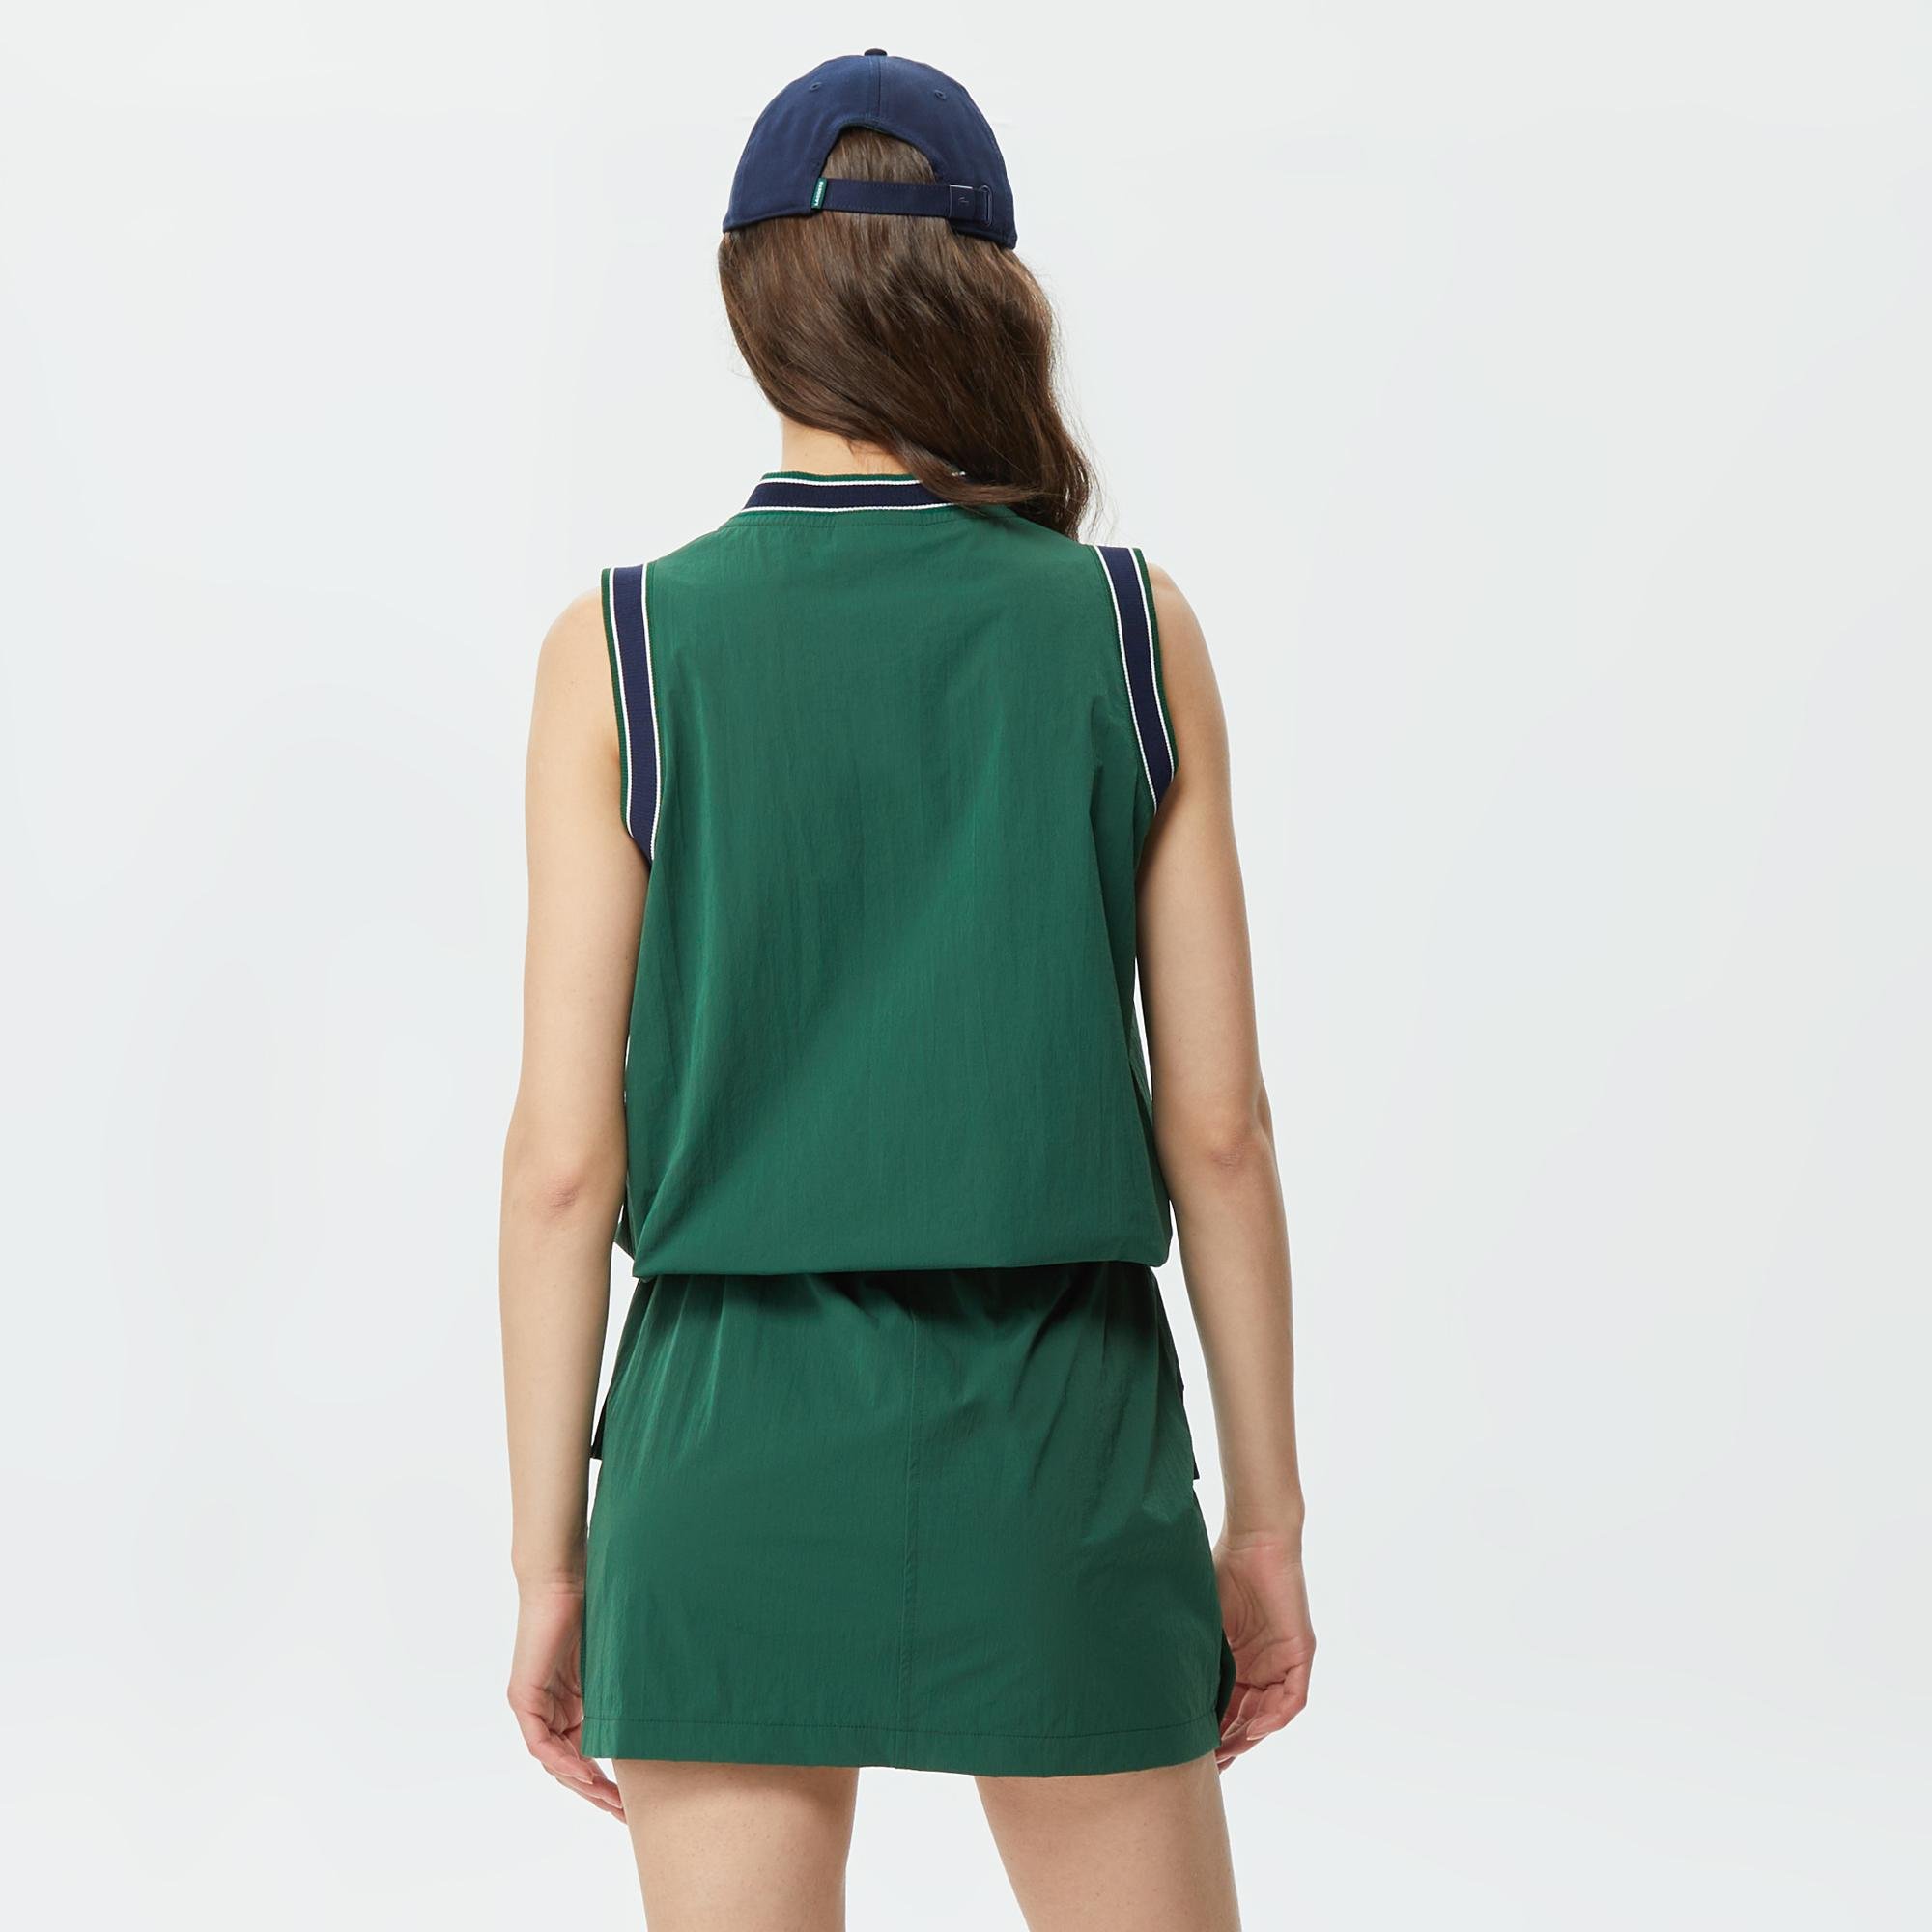 Lacoste Kadın Relaxed Fit V Yaka Renk Bloklu Yeşil Bluz. 2